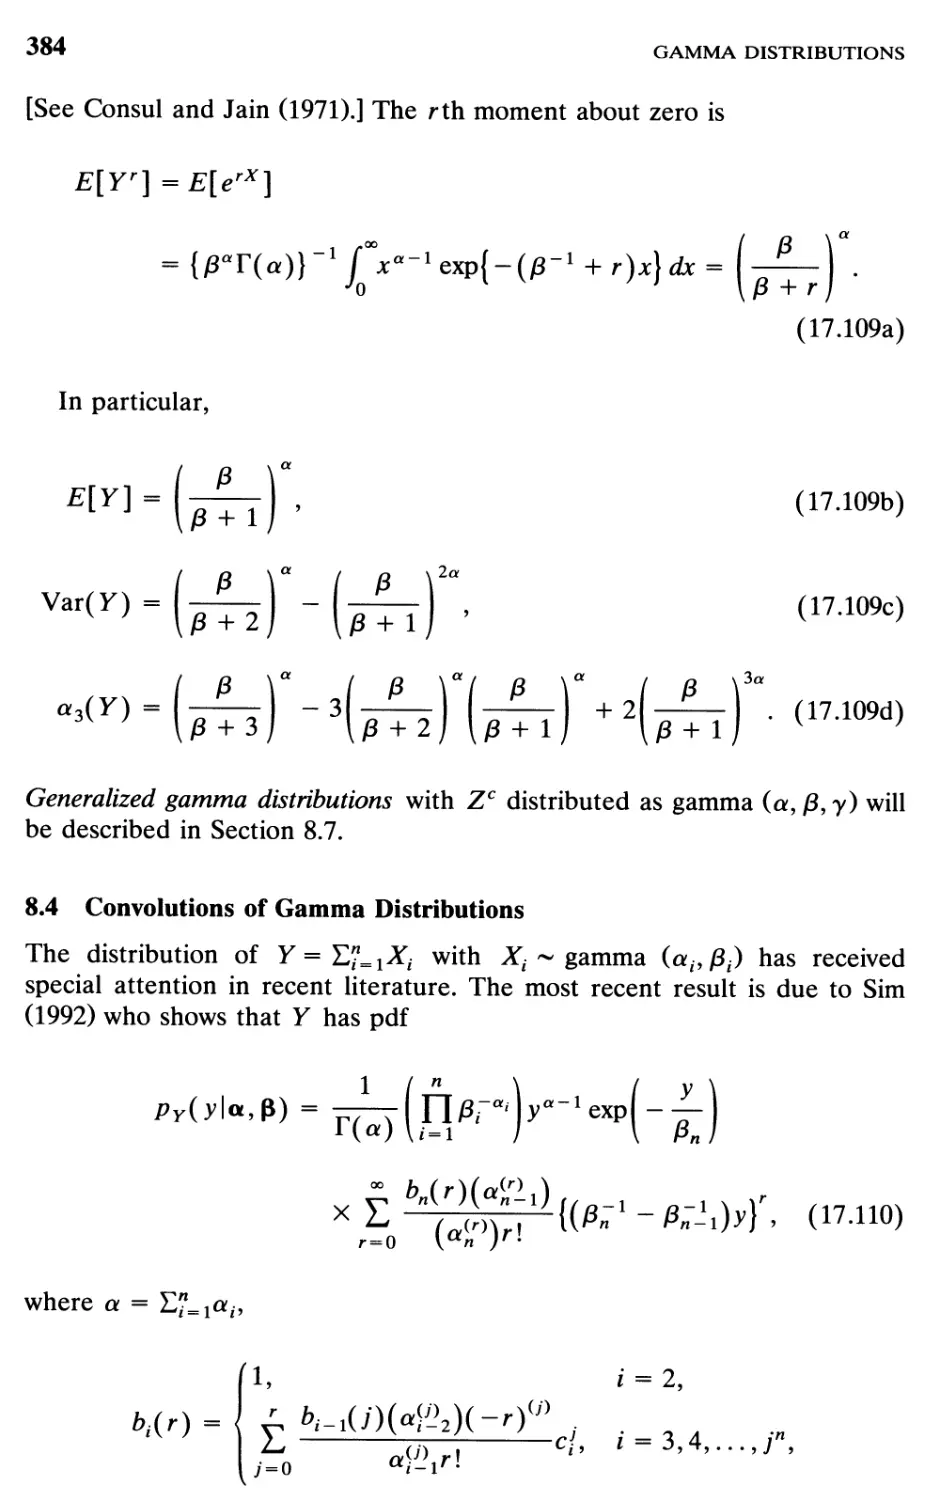 8.4 Convolutions of Gamma Distributions, 384